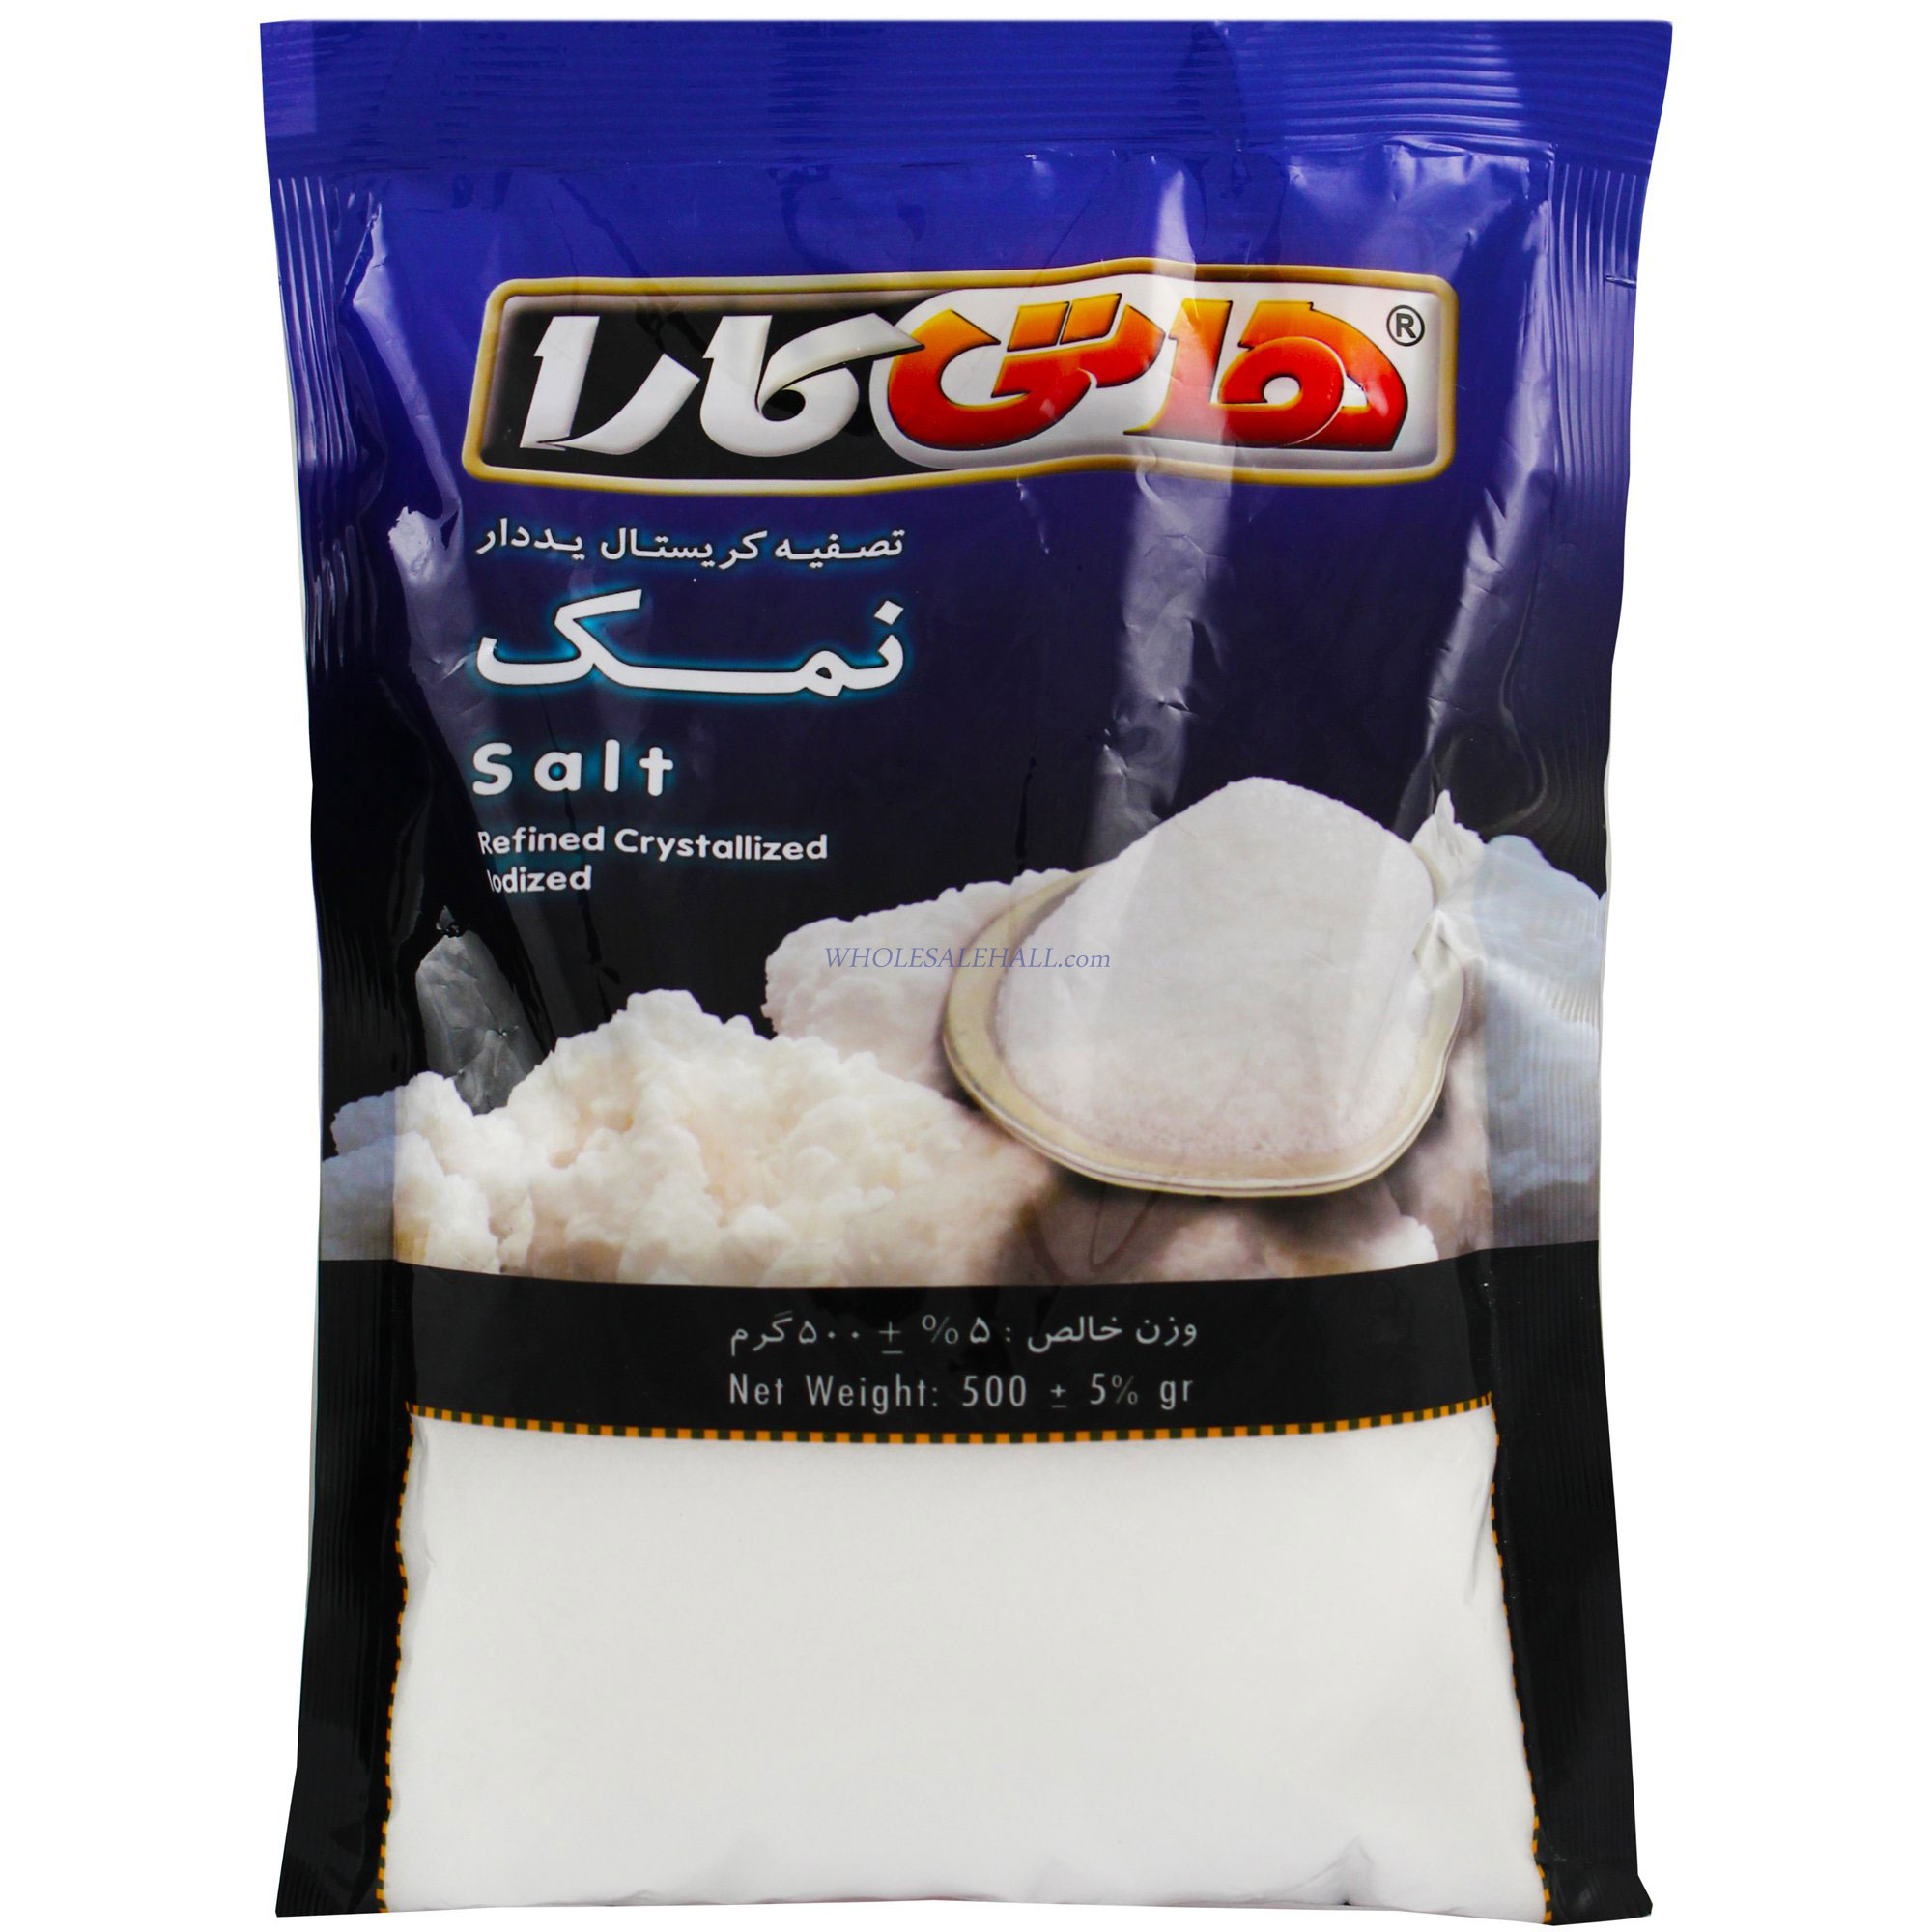 Salt 500 grams of Kara